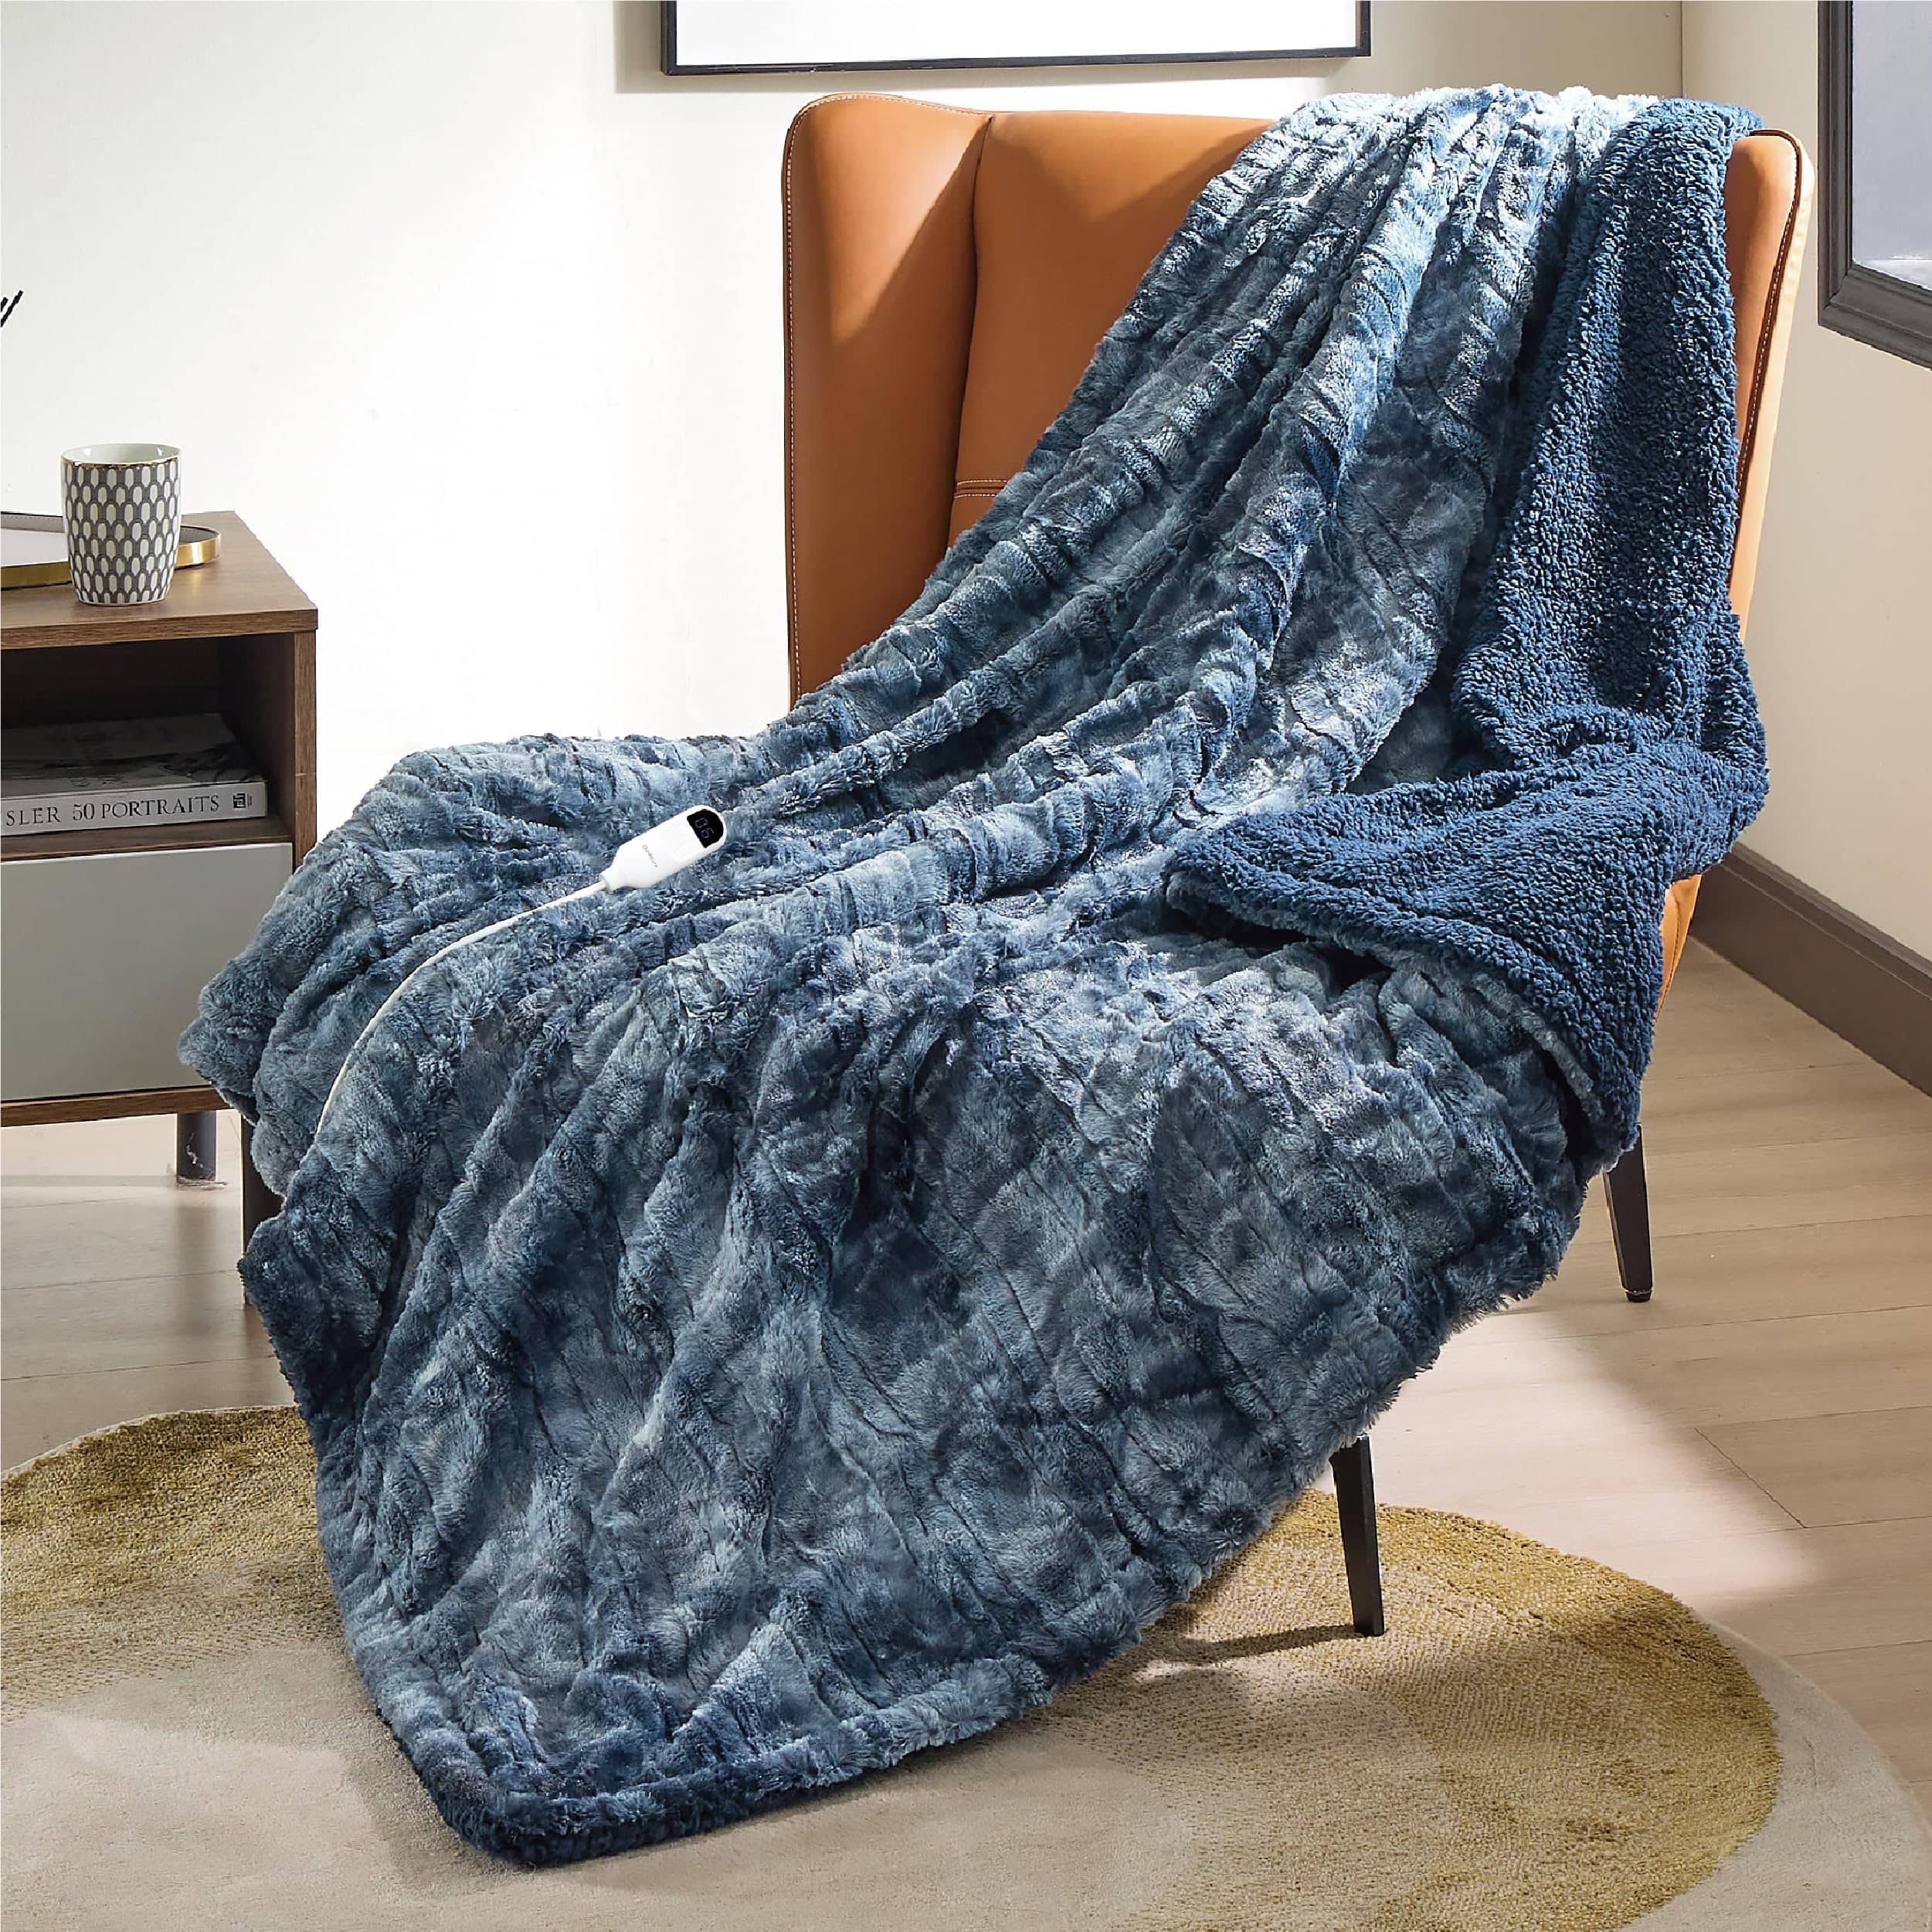 Bedsure Electric Heated Faux Fur Sherpa Blanket